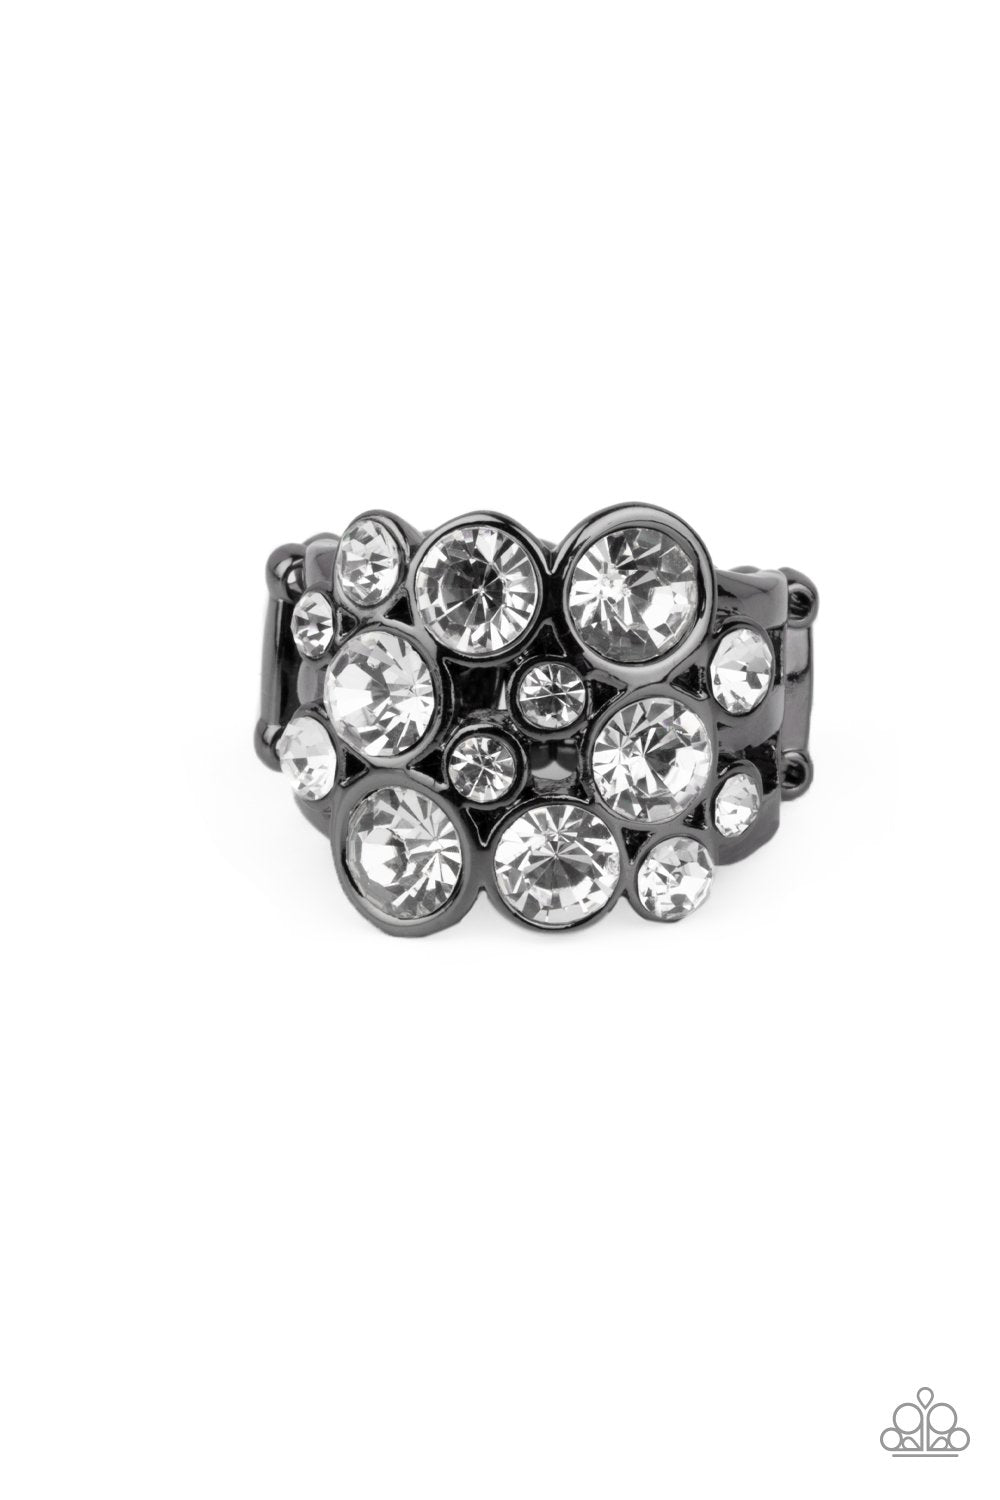 Bubbling Bravado Gunmetal Black and White Rhinestone Ring - Paparazzi Accessories- lightbox - CarasShop.com - $5 Jewelry by Cara Jewels